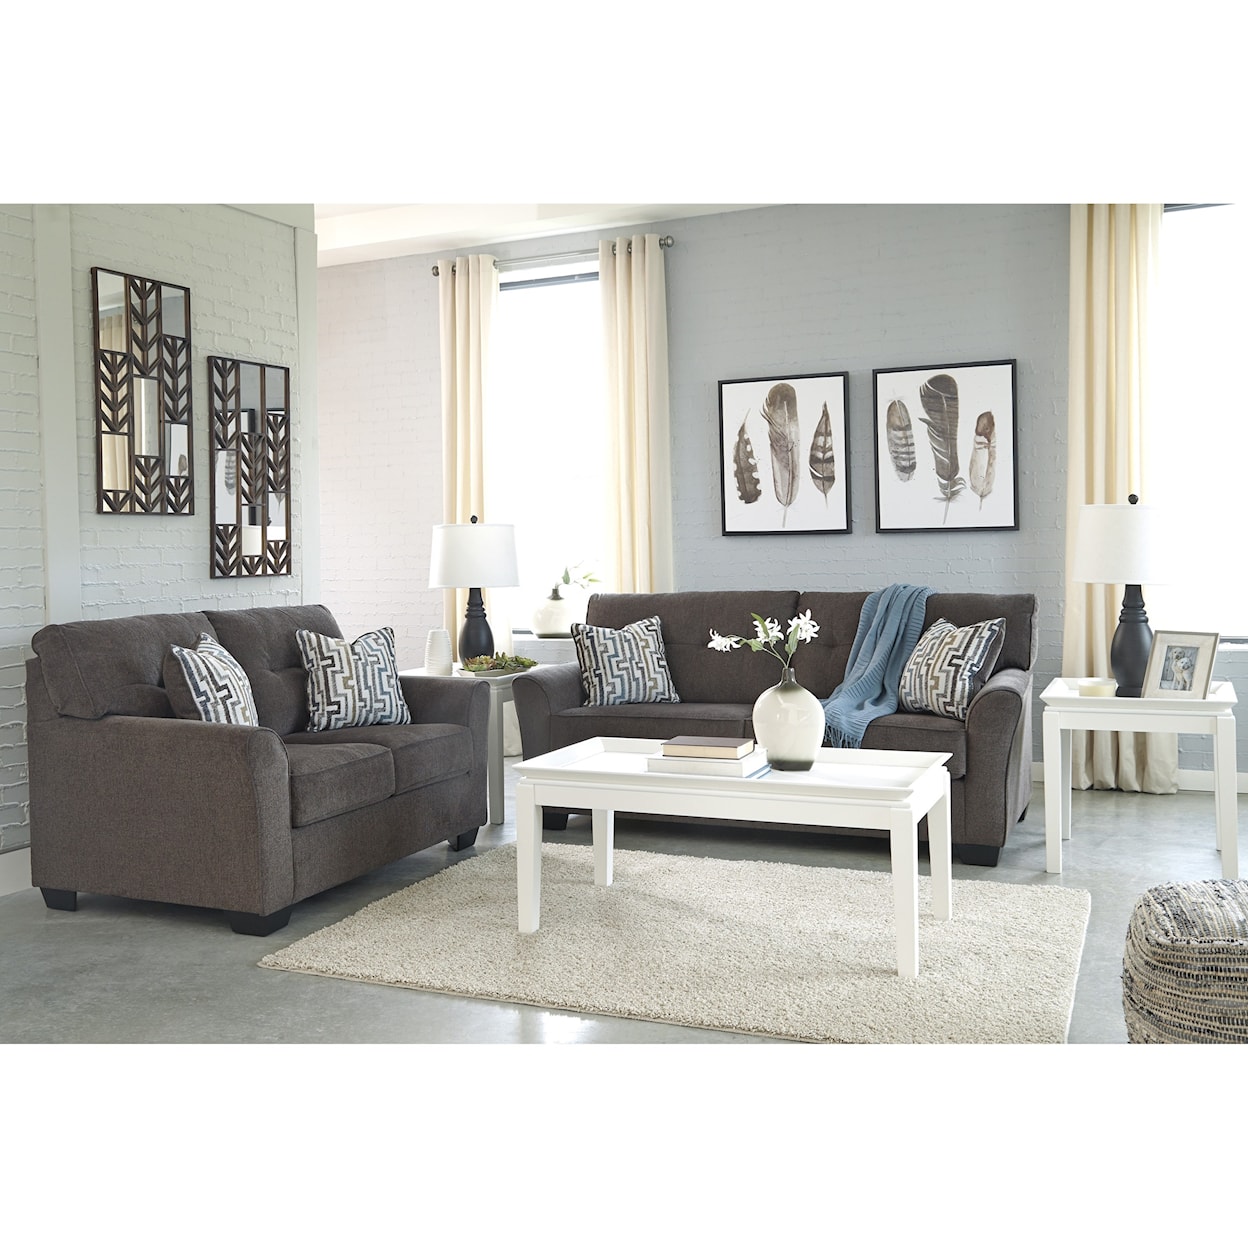 Ashley Furniture Benchcraft Alsen Stationary Living Room Group